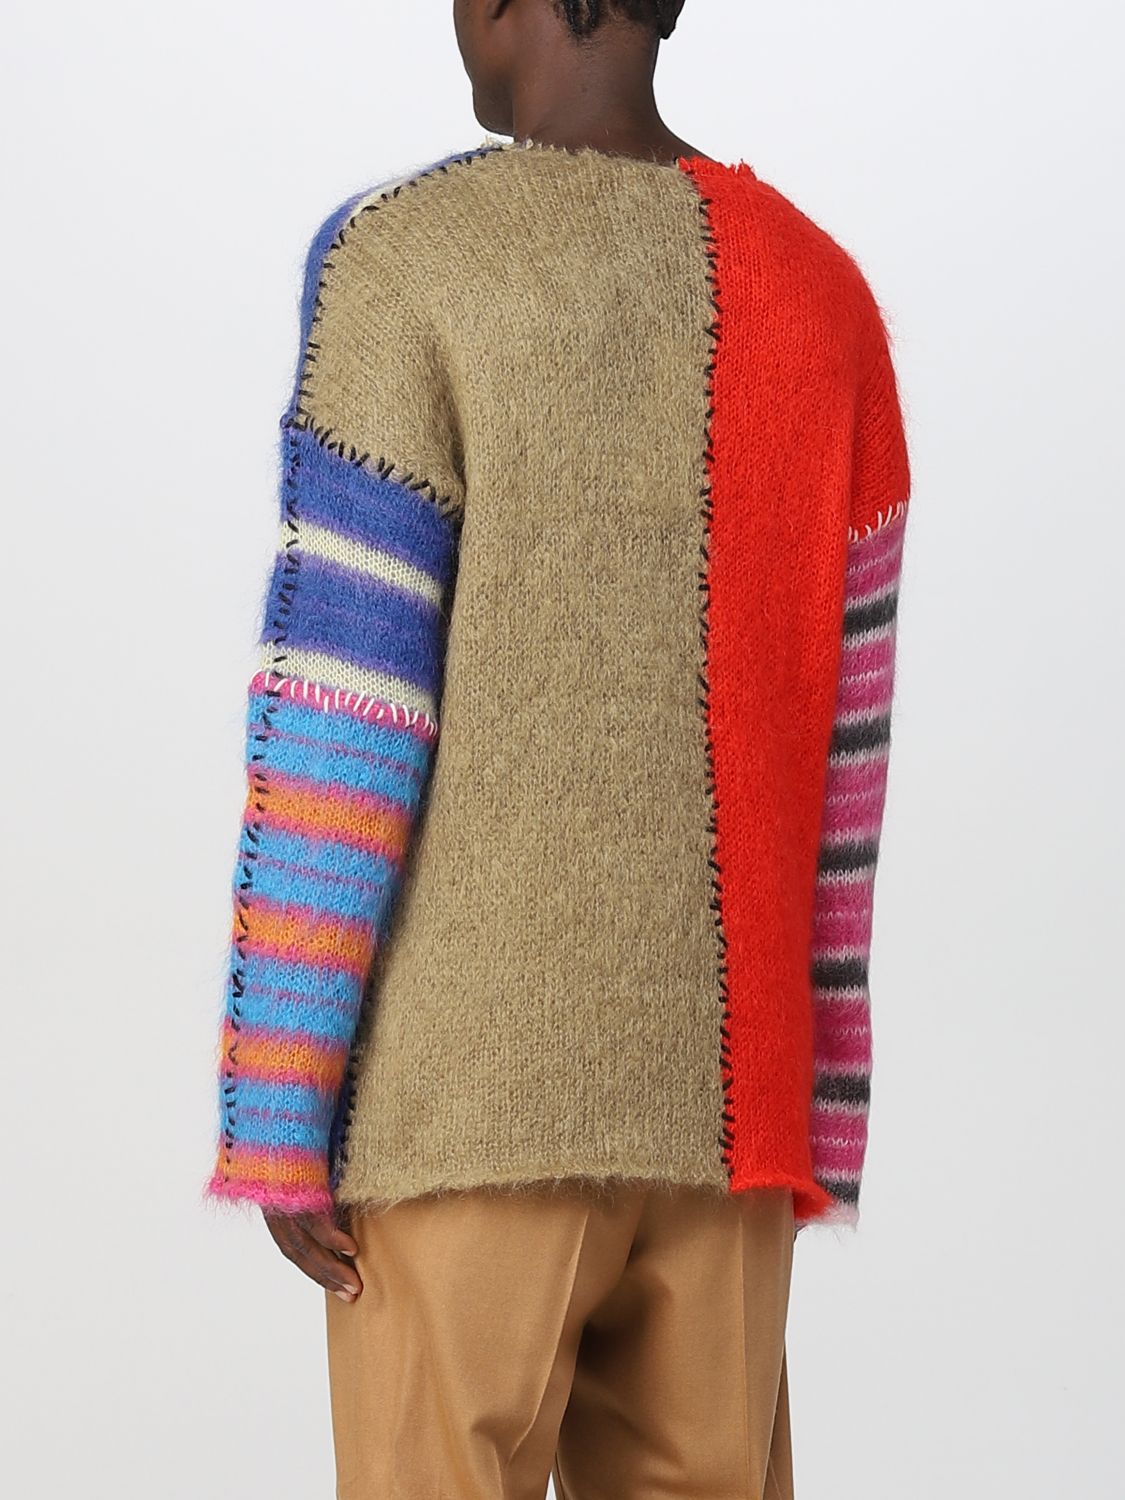 QC My sweater haul （Gucci / Amiri / Celine / LV） : r/CoutureReps